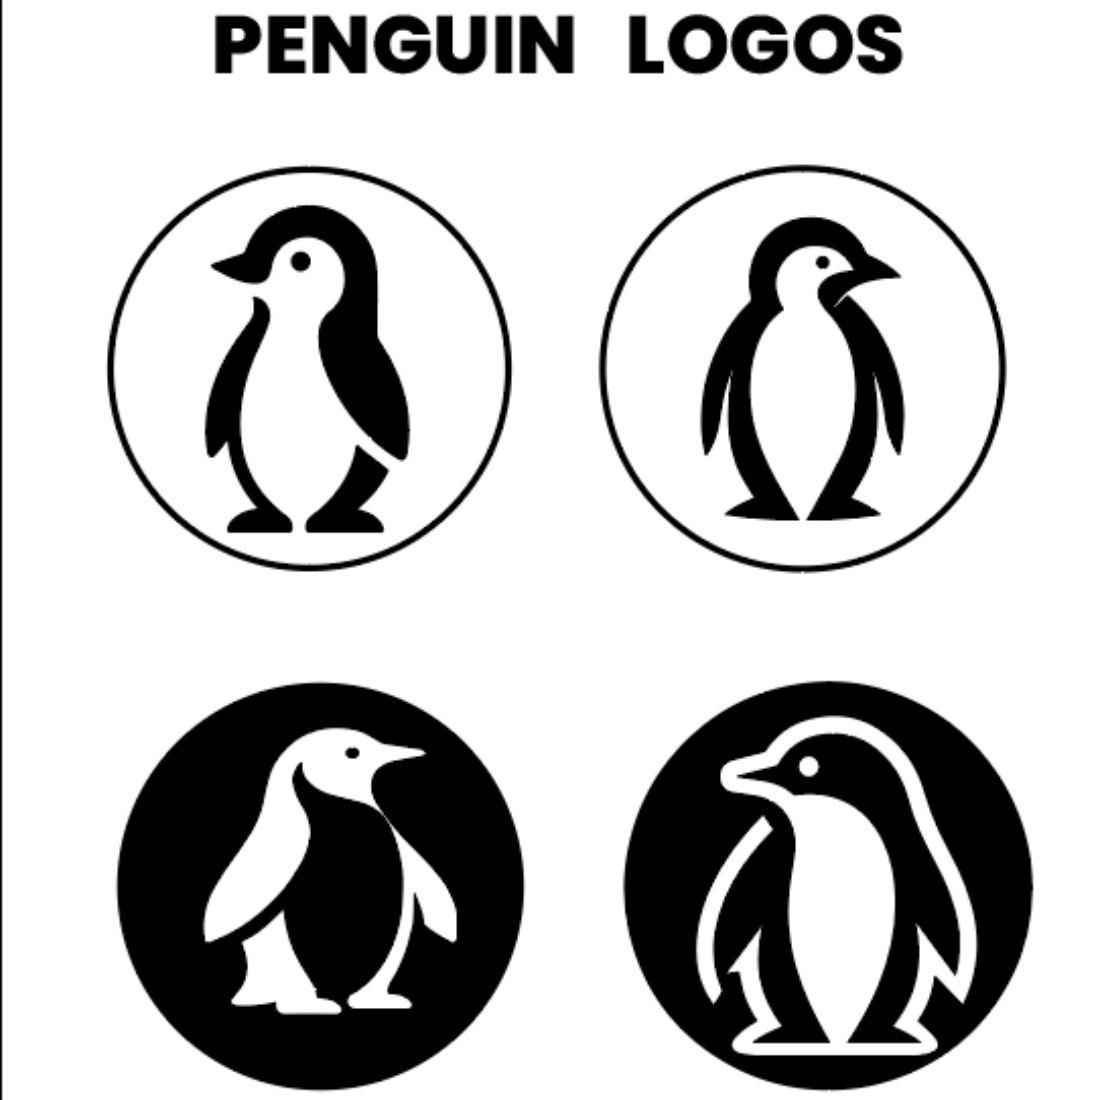 penguin logos preview image.